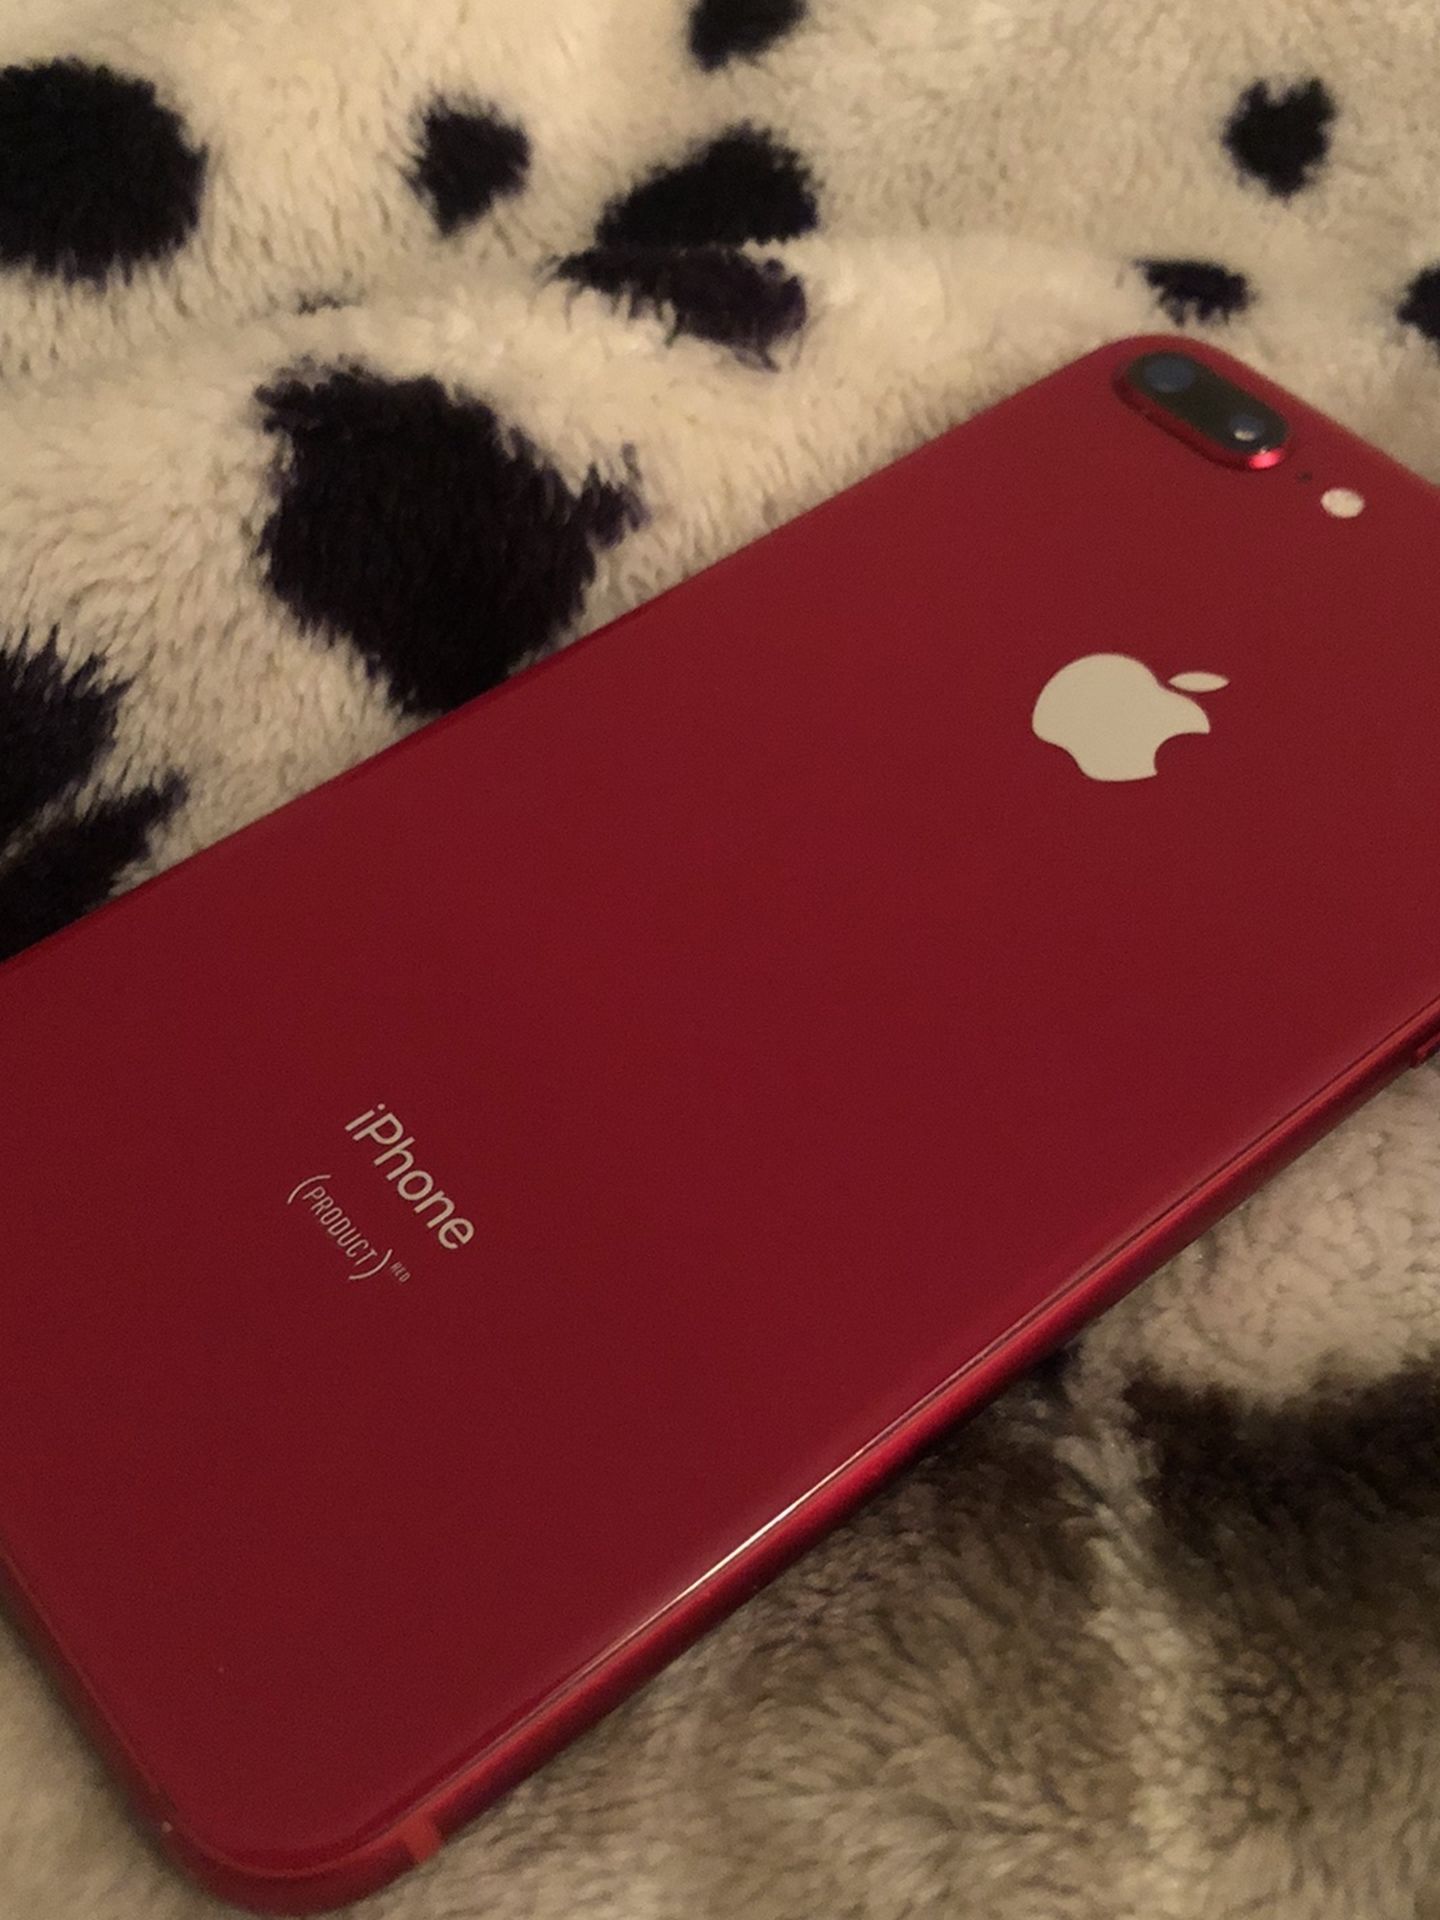 Apple iPhone 8plus 64gb Factory Unlocked Red